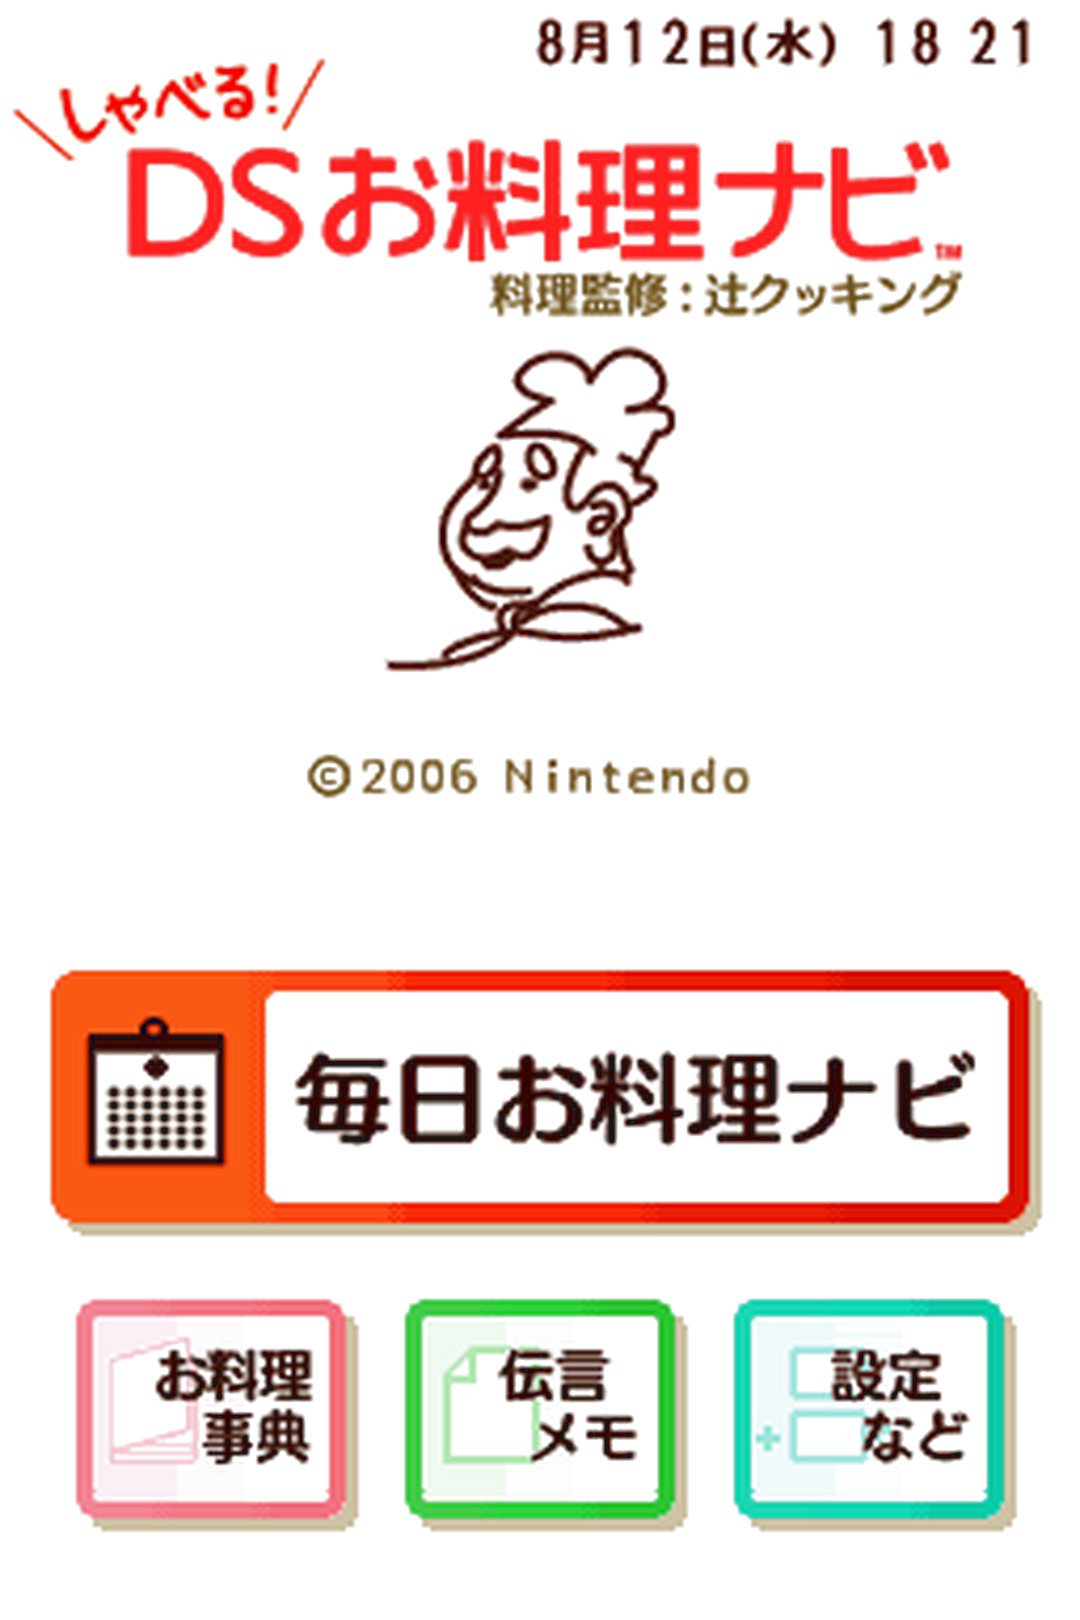 DS版『しゃべる!DSお料理ナビ』